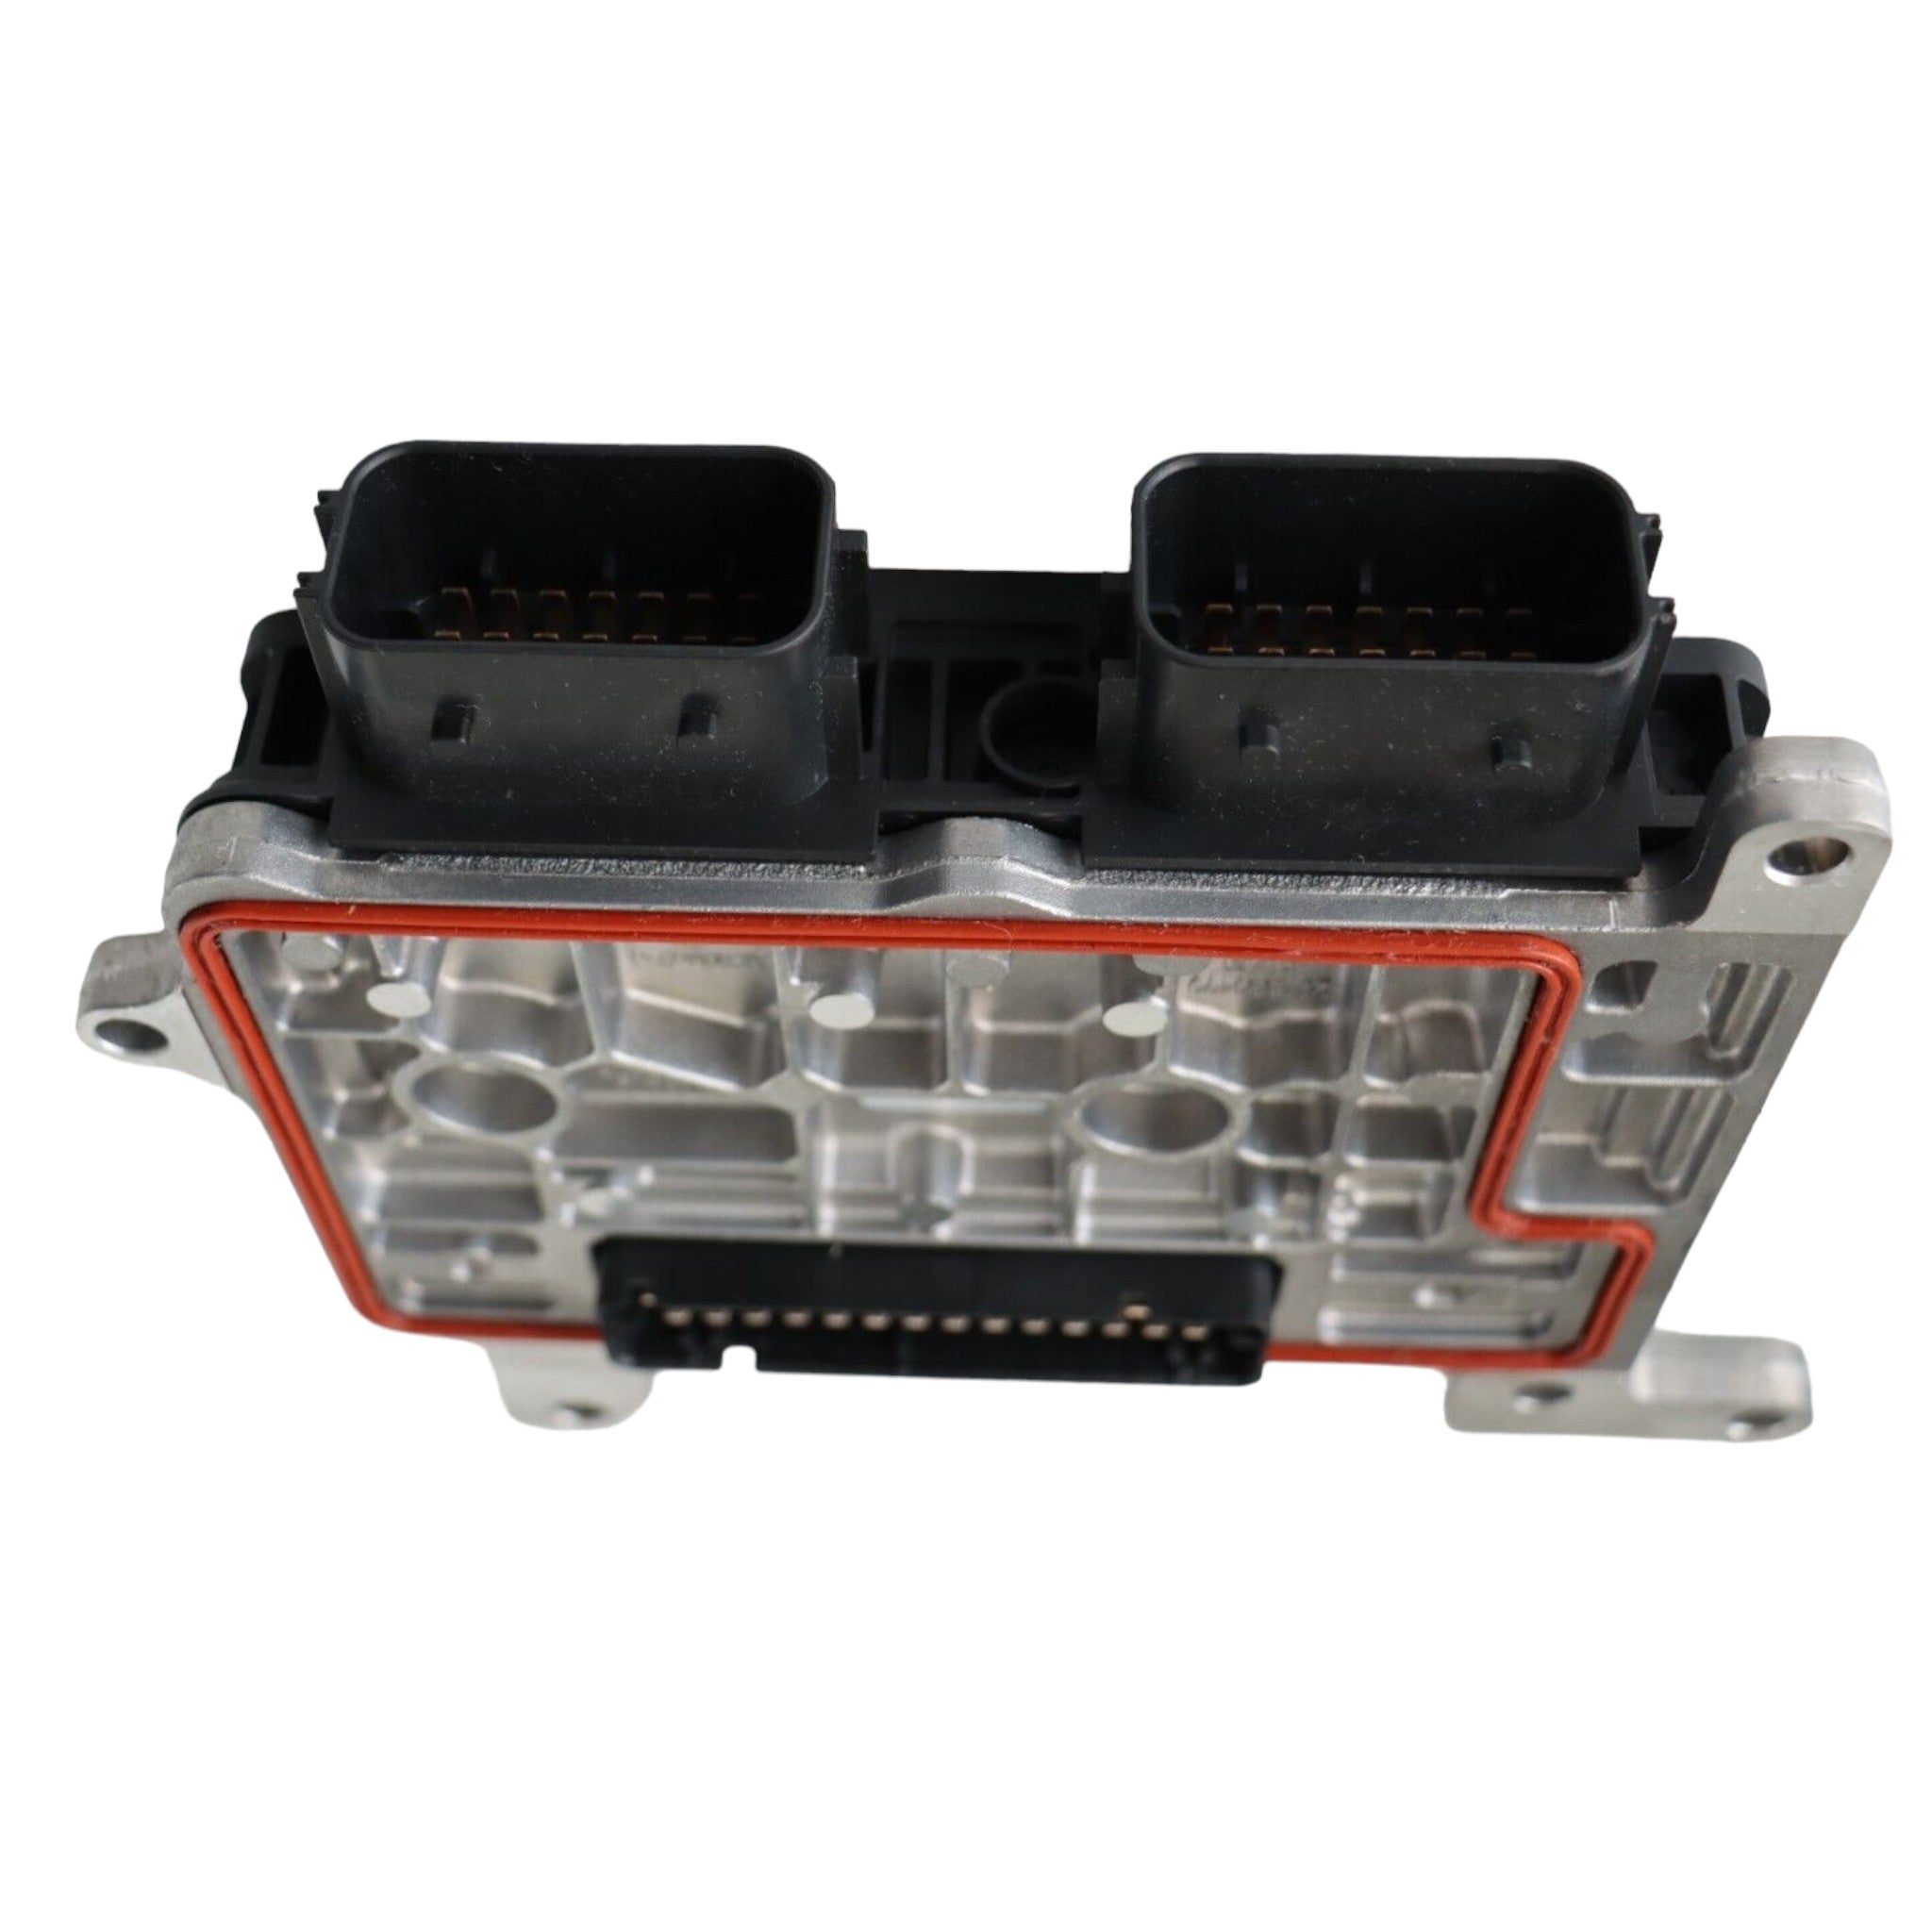 A9484460209 Genuine Detroit Diesel Transmission Control Module